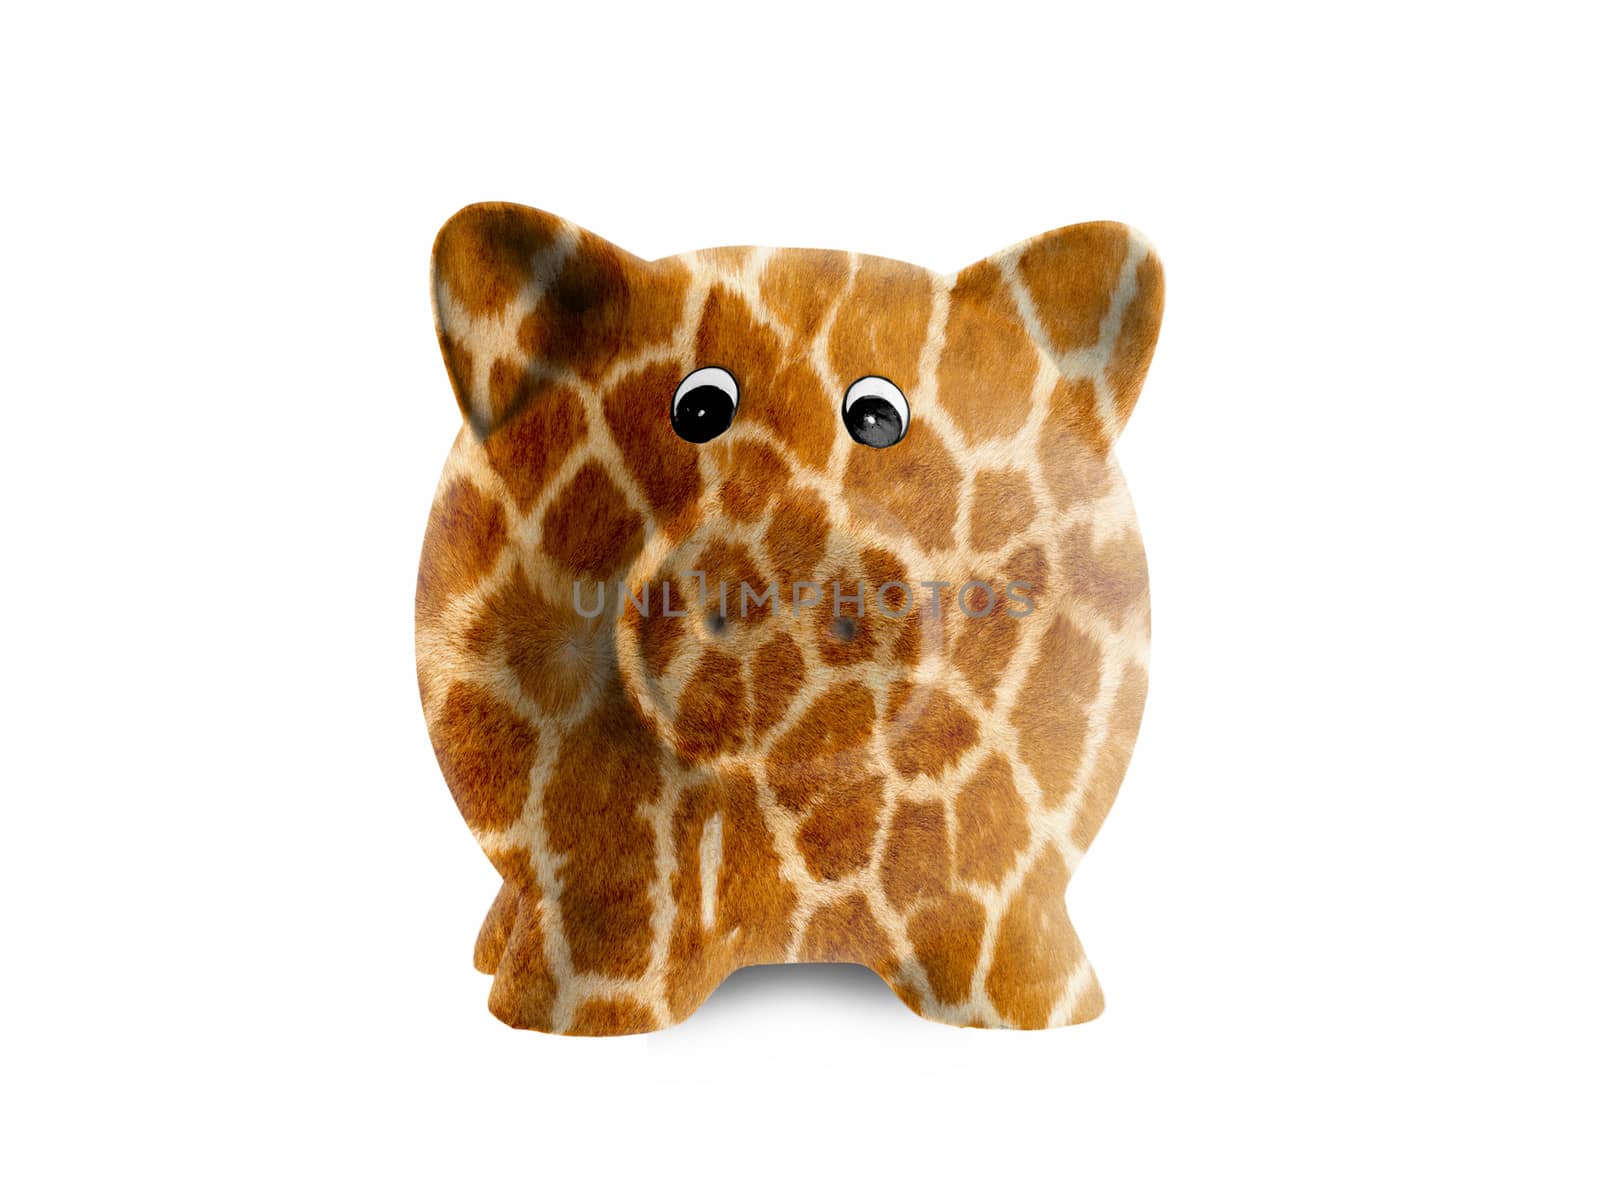 Unique pink ceramic piggy bank isolated, giraffe print